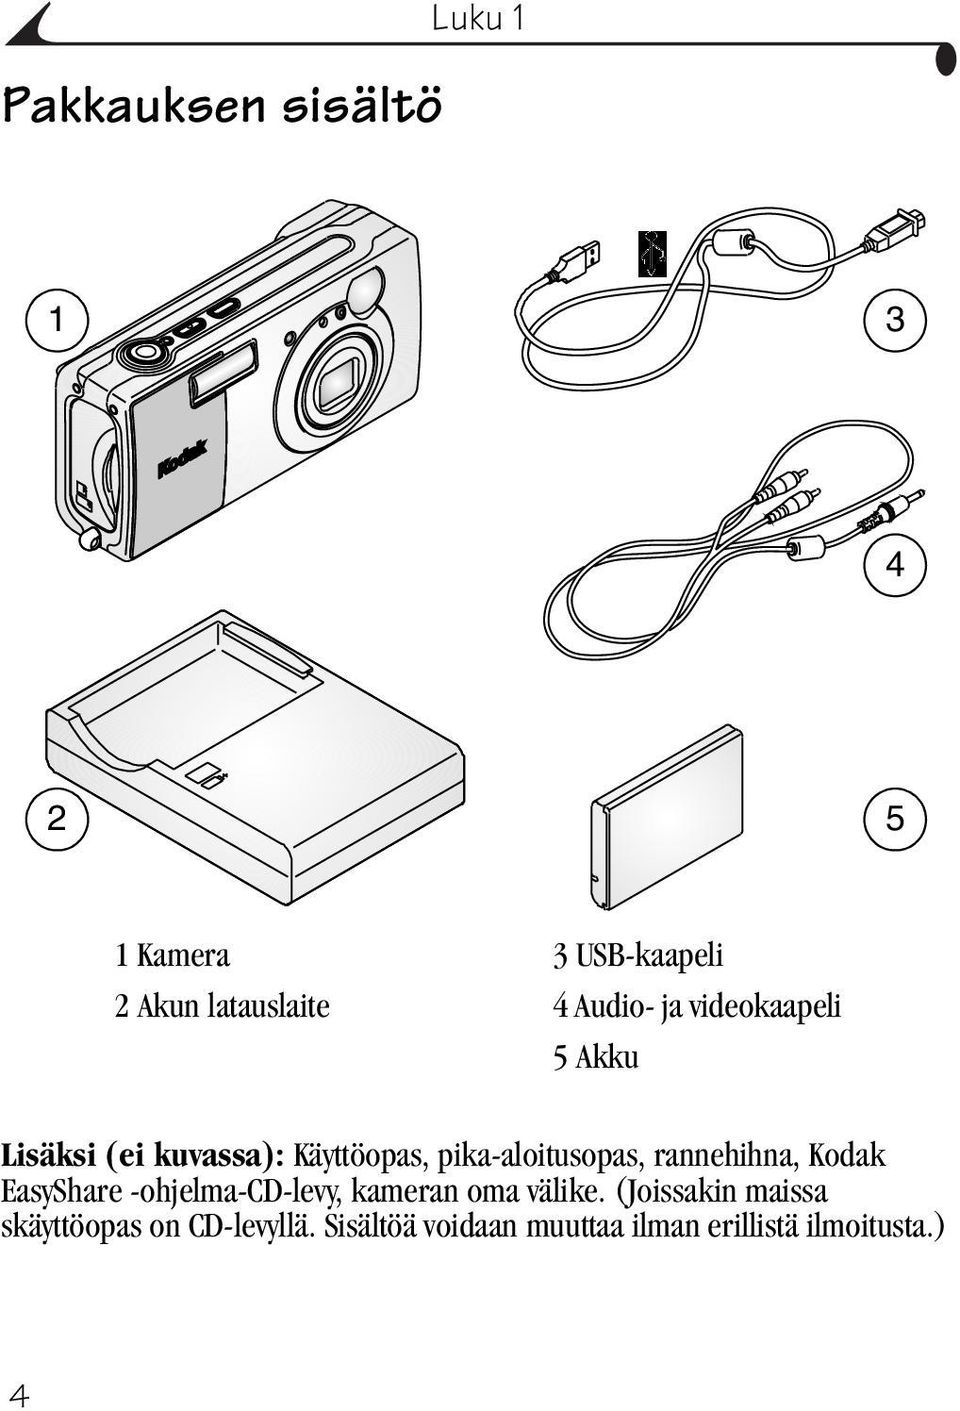 rannehihna, Kodak EasyShare -ohjelma-cd-levy, kameran oma välike.